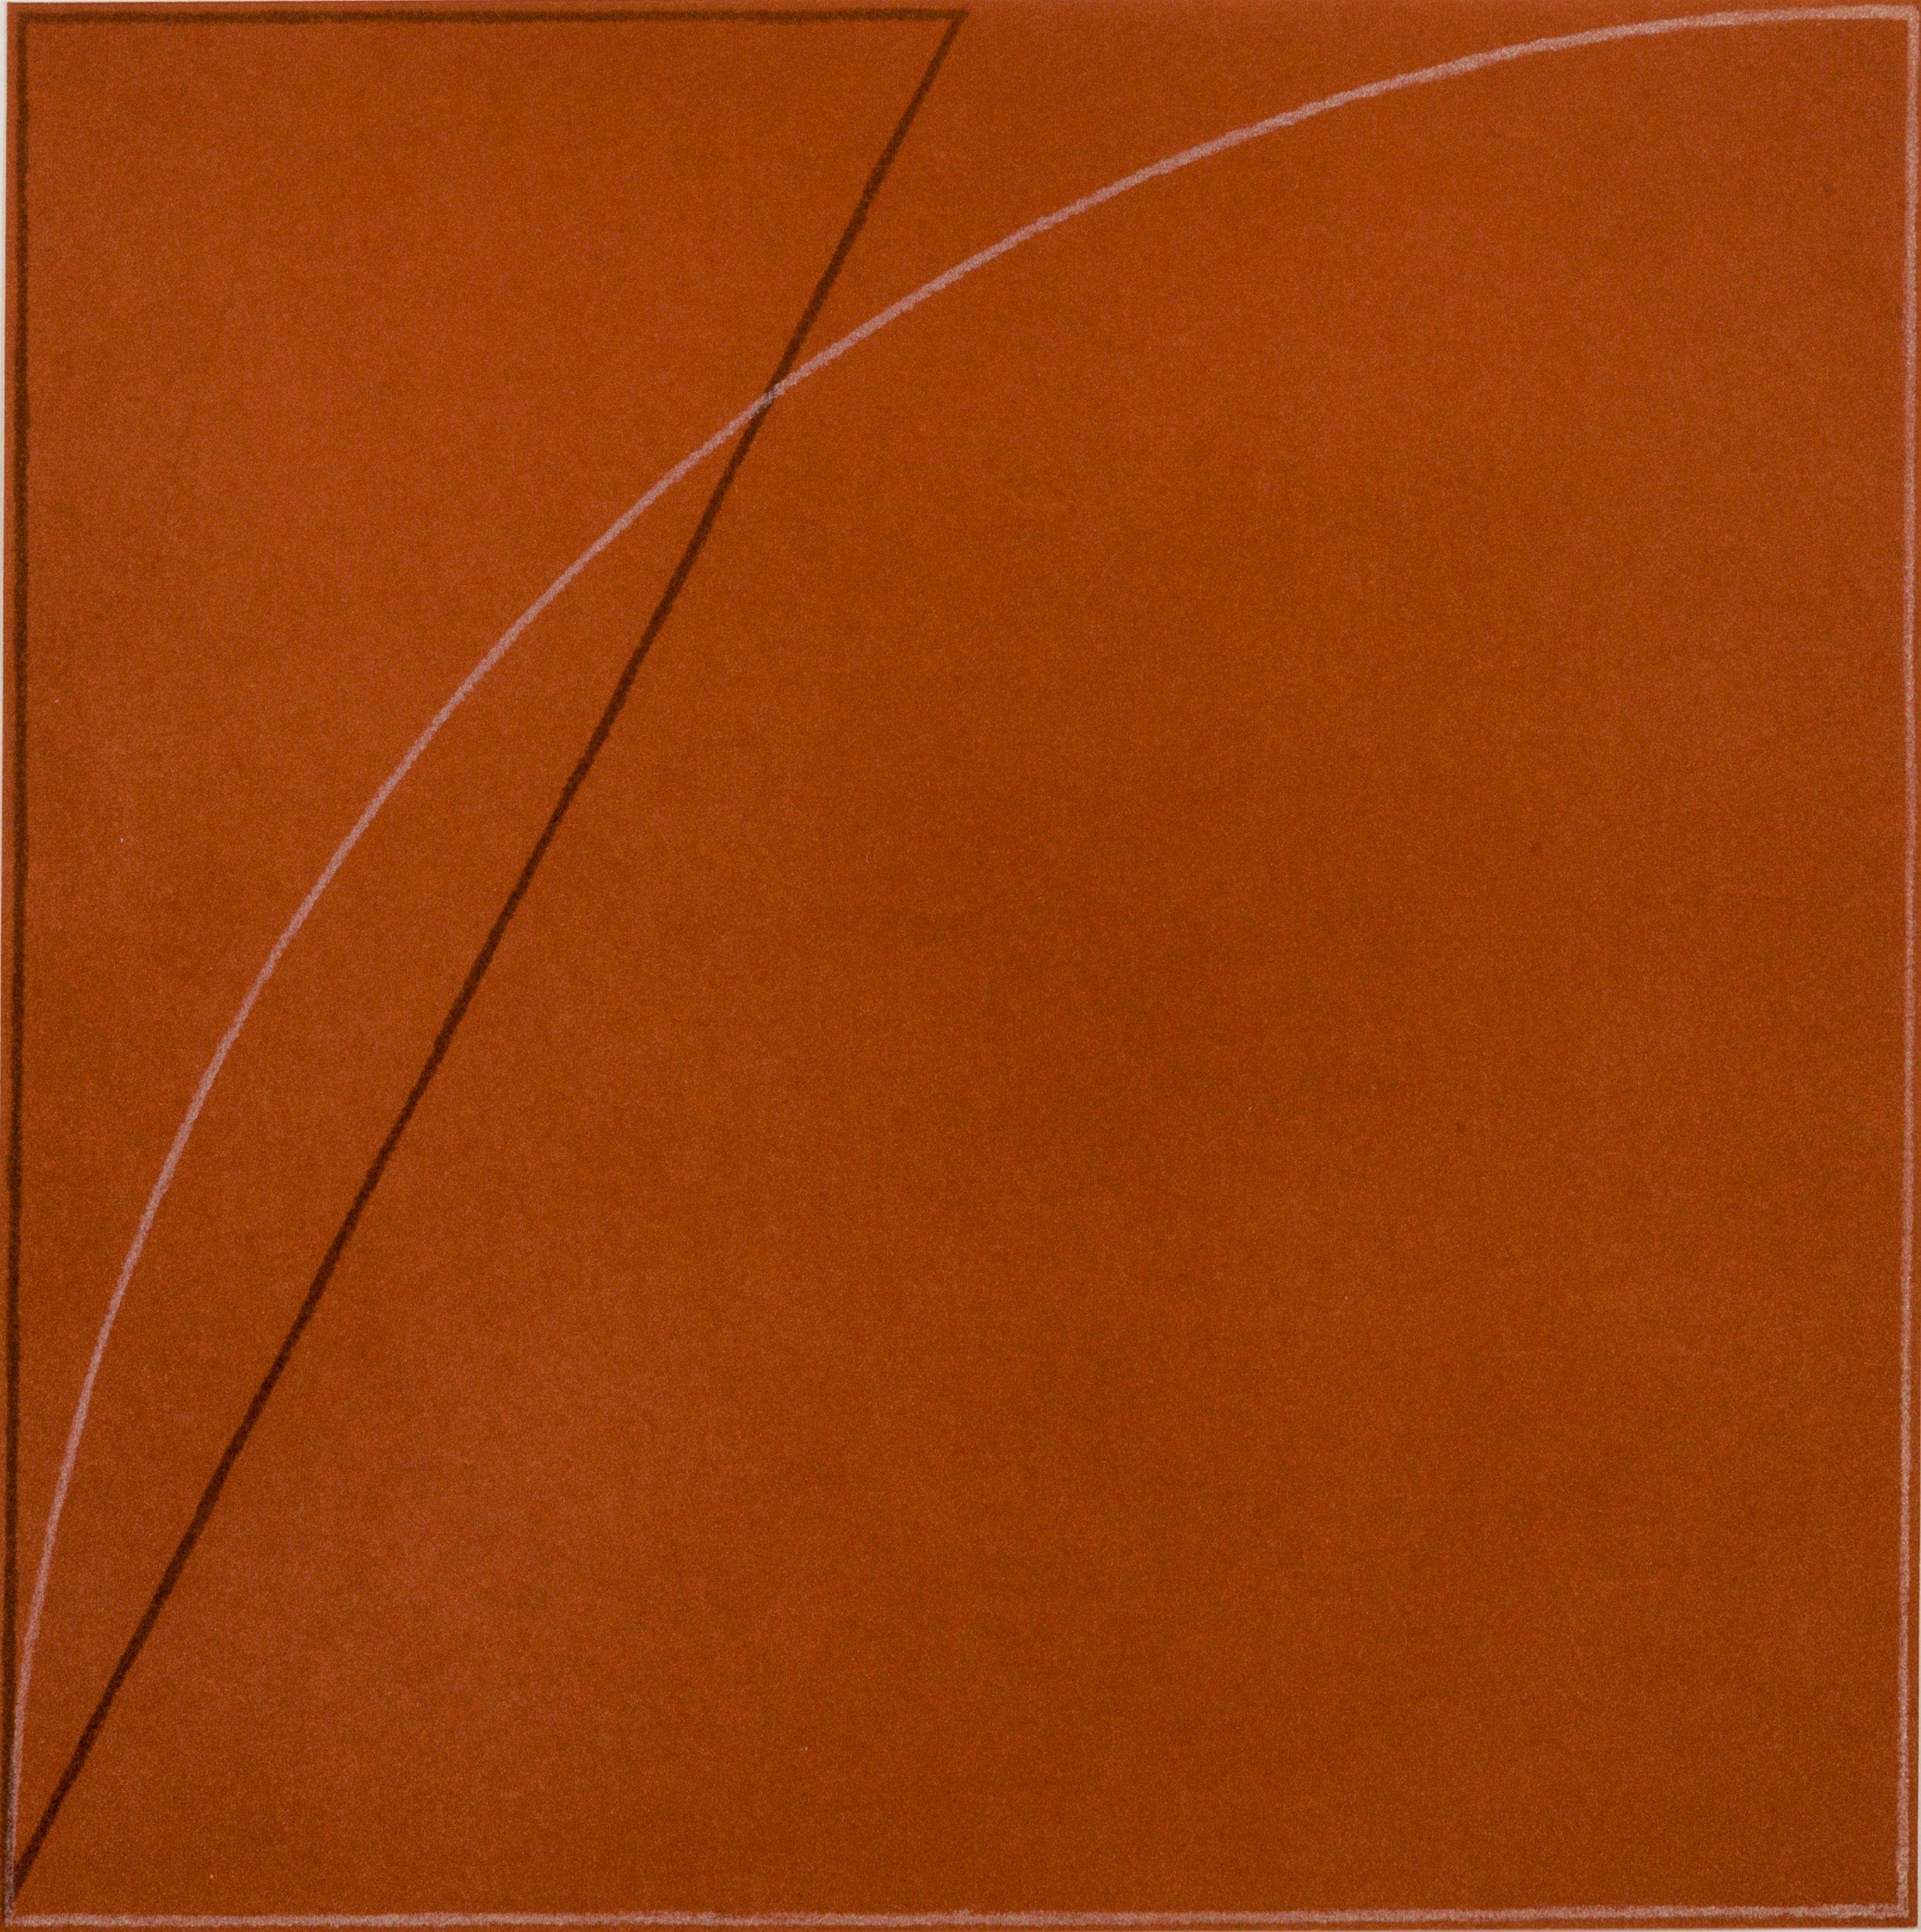 Five Aquatints - Brown Abstract Print by Robert Mangold